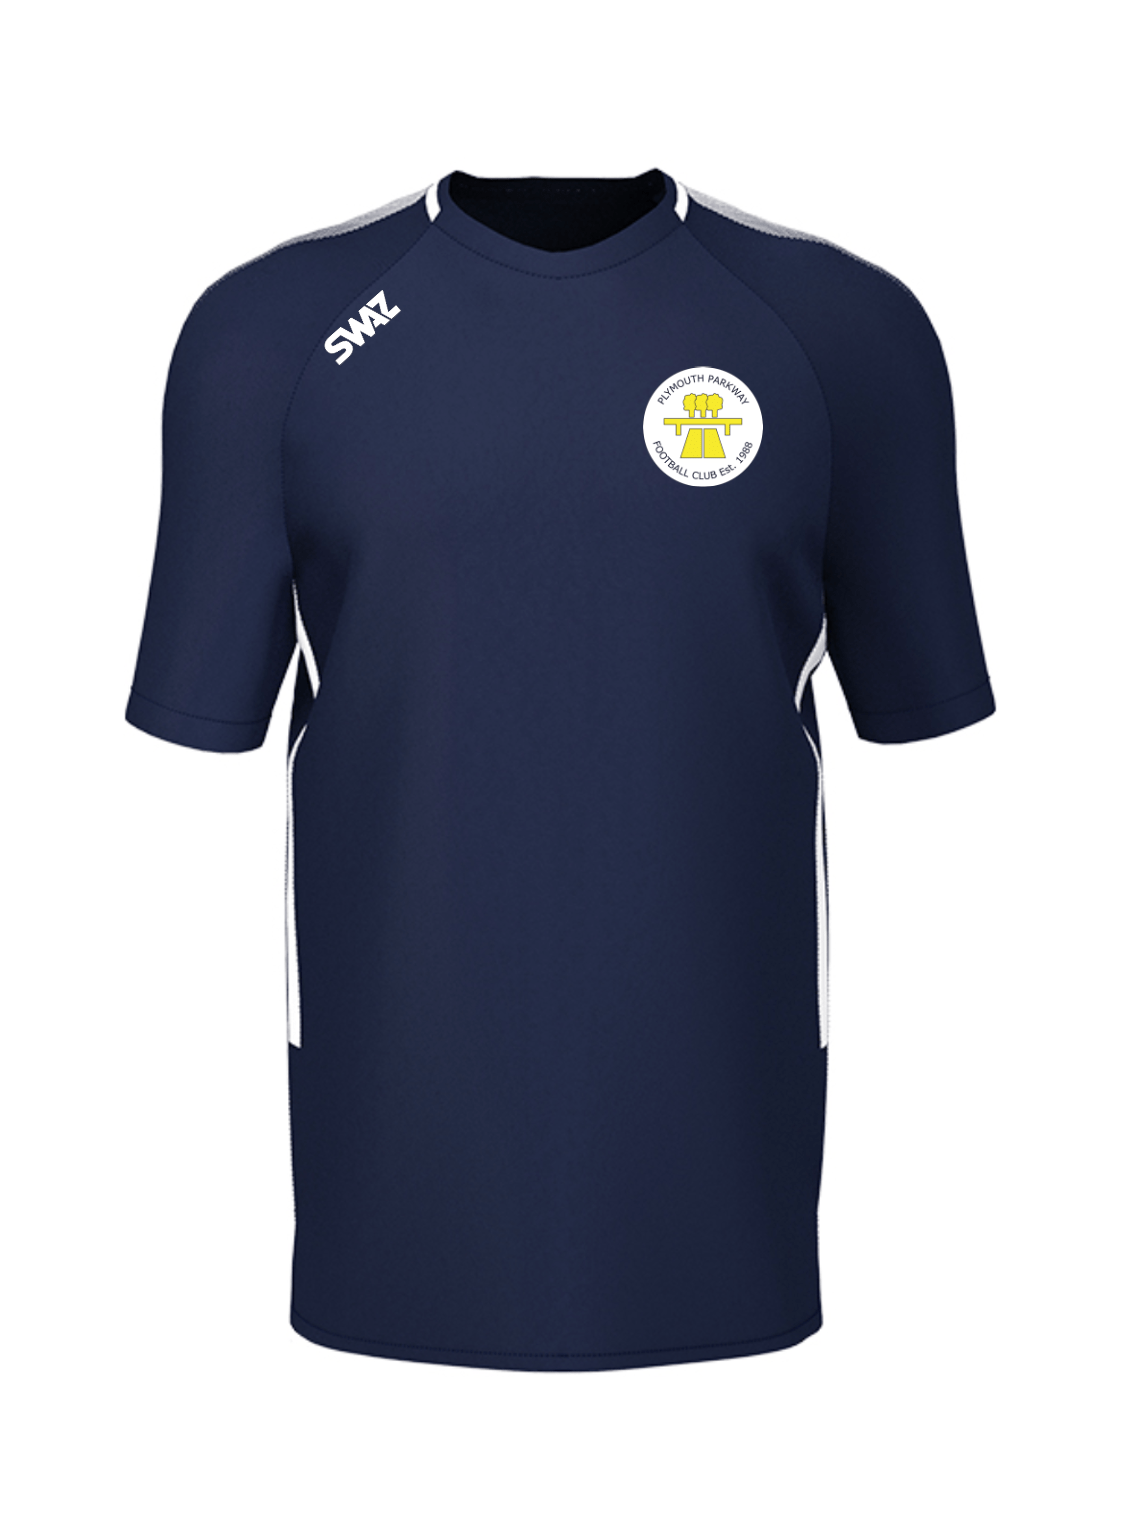 Elite Plymouth Parkway Training Shirt | Football Training Kit and Teamwear